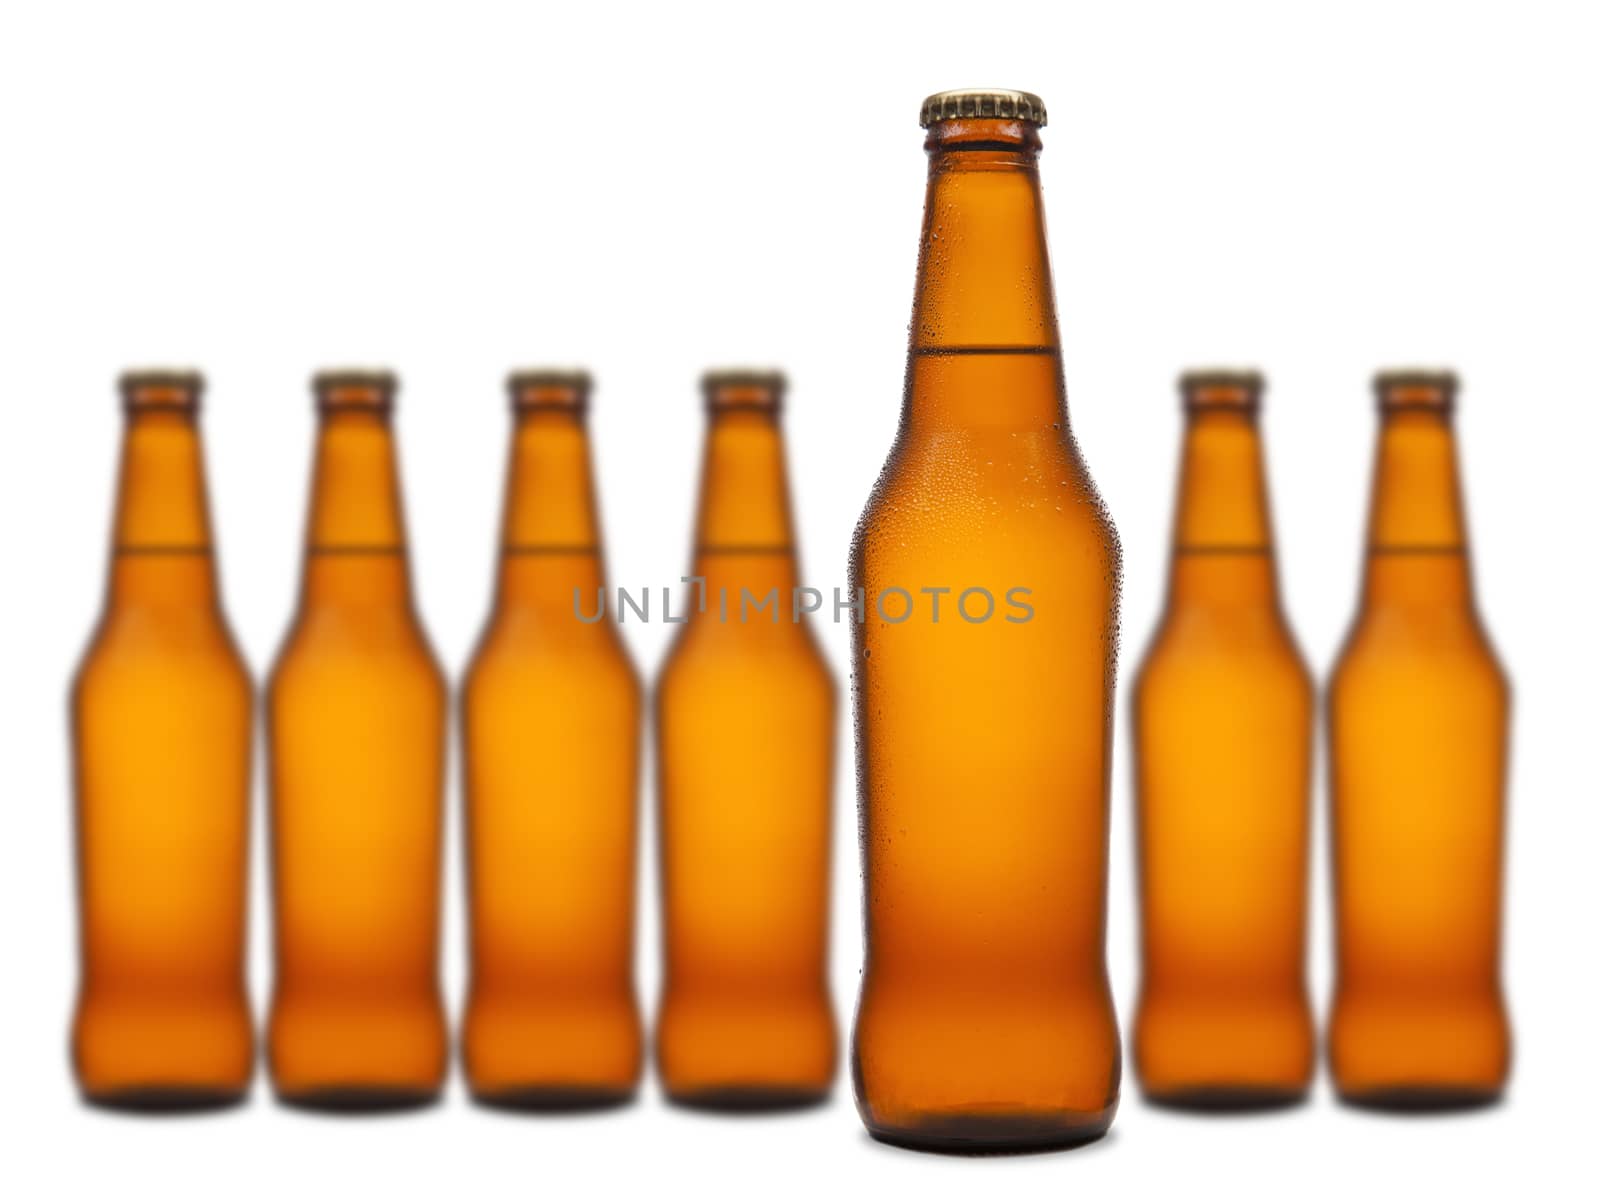 Seven bottles by antonprado